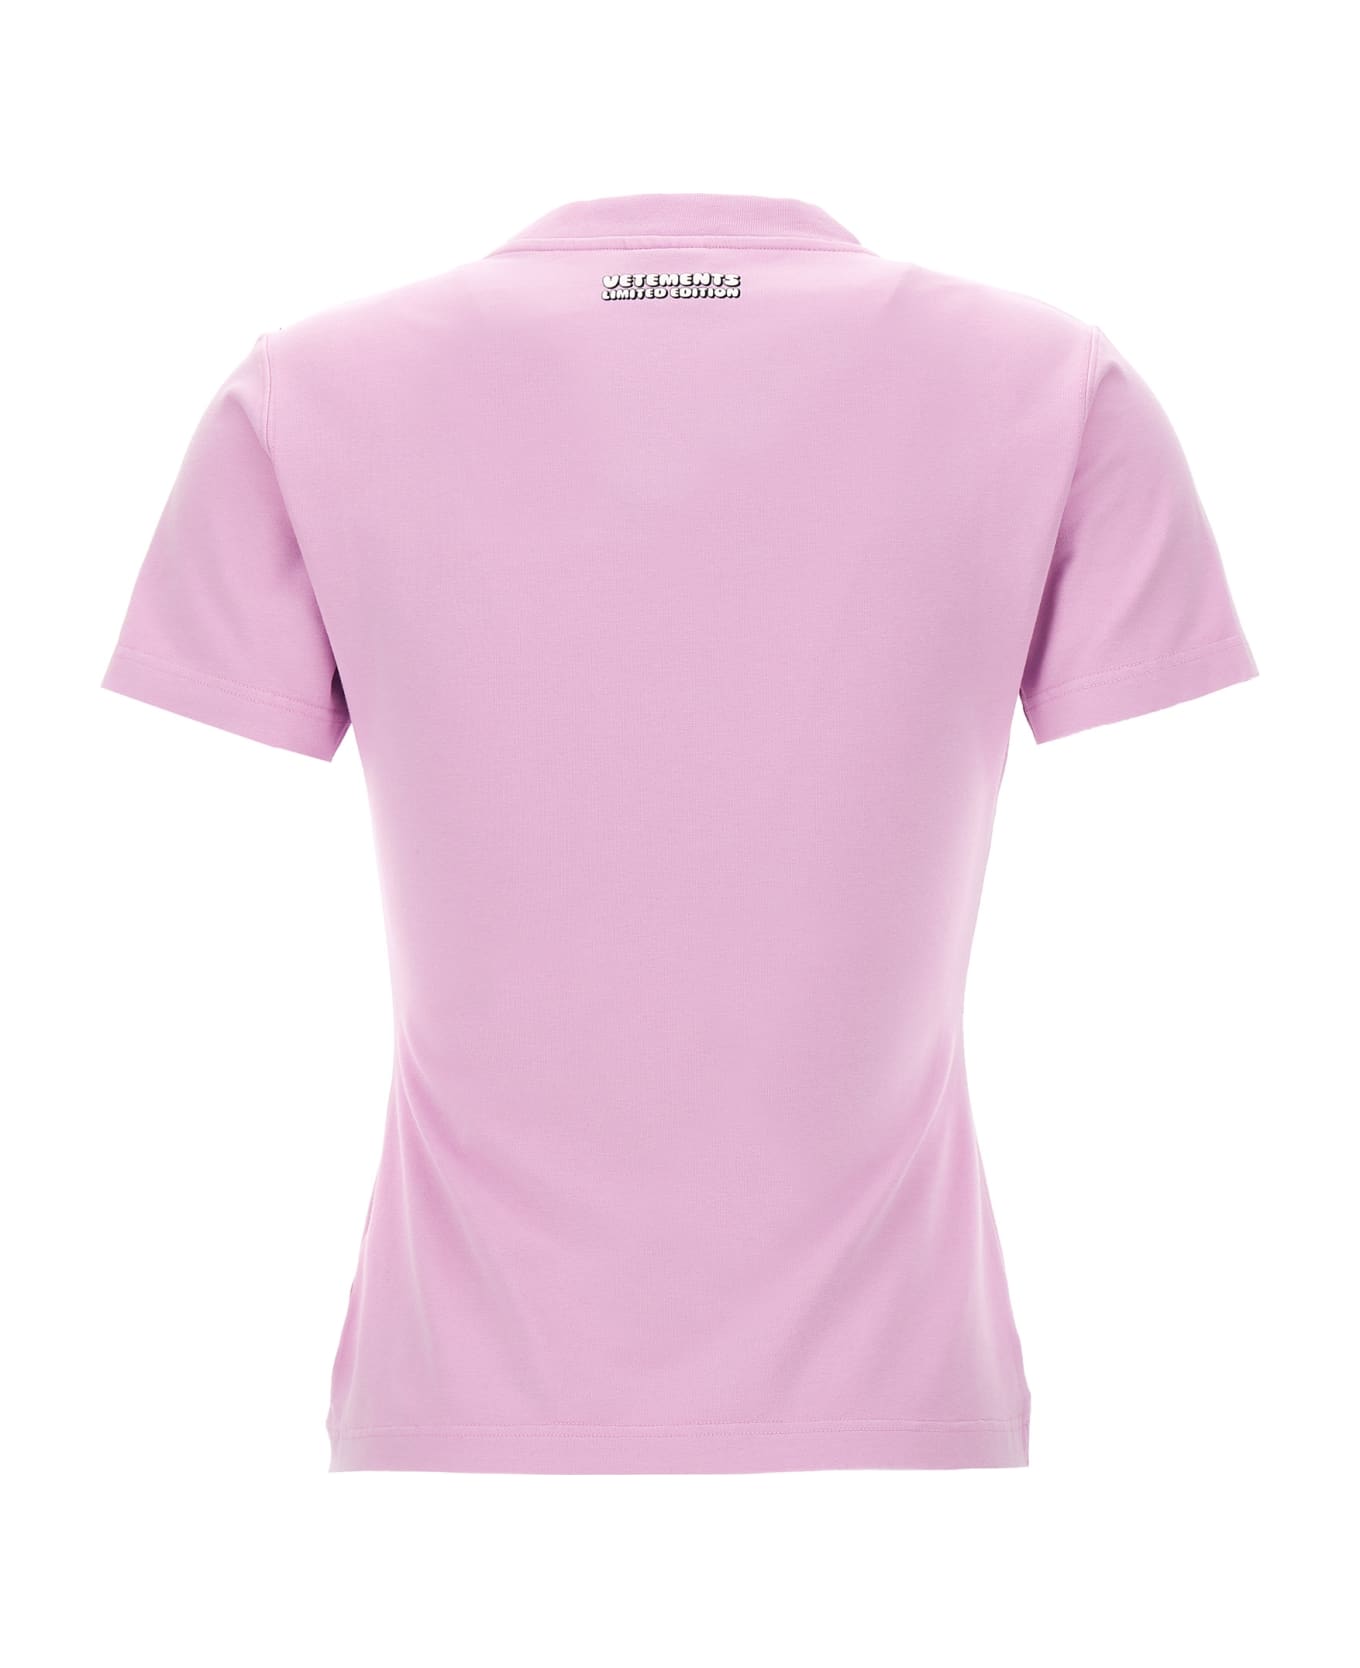 VETEMENTS 'logo' T-shirt - Pink Tシャツ